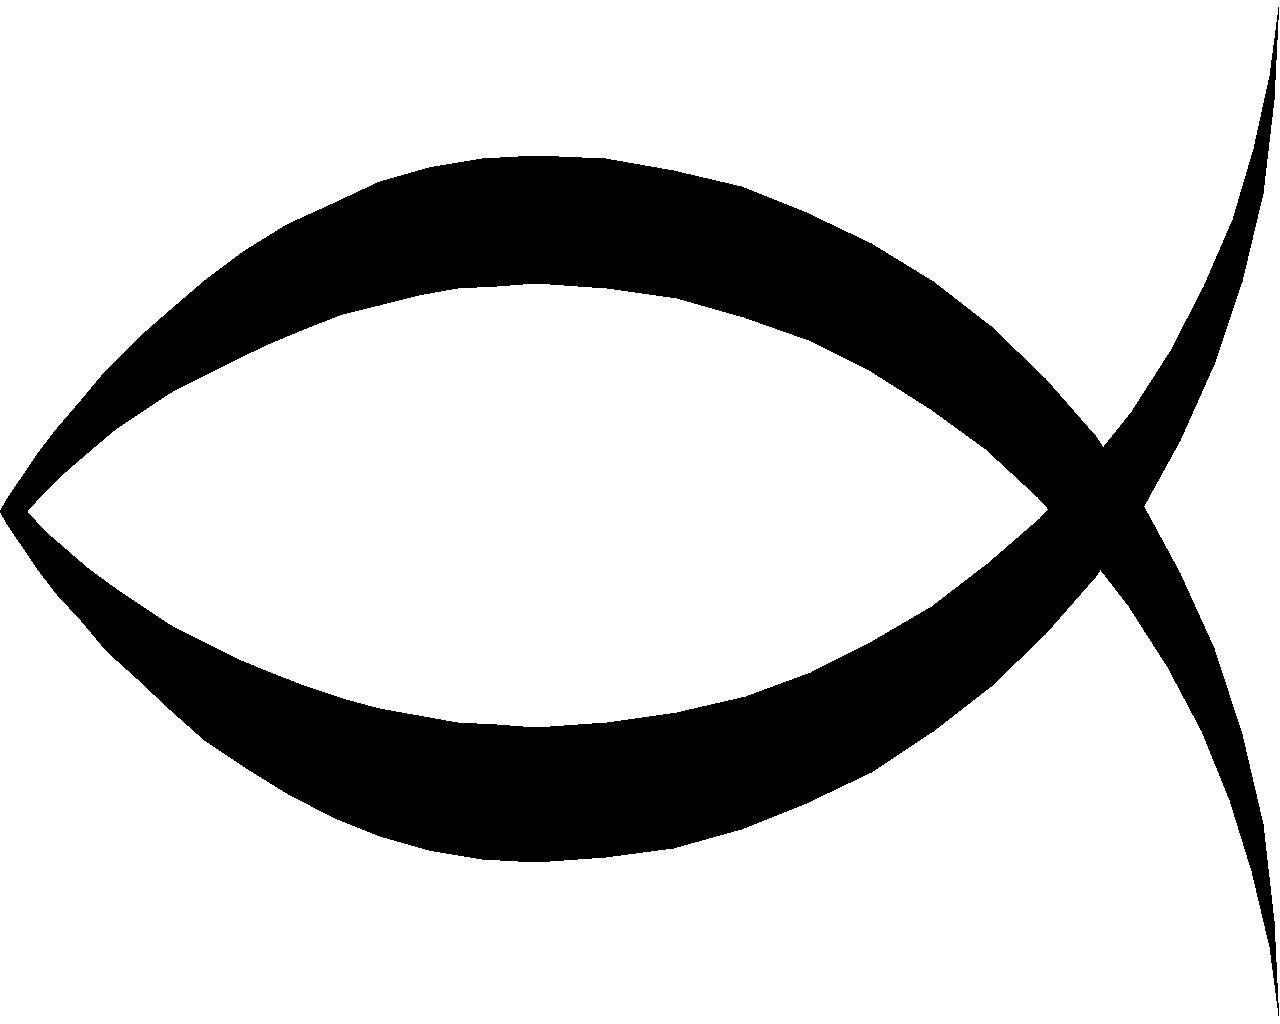 Cross And Christian Fish Symbols Clipart